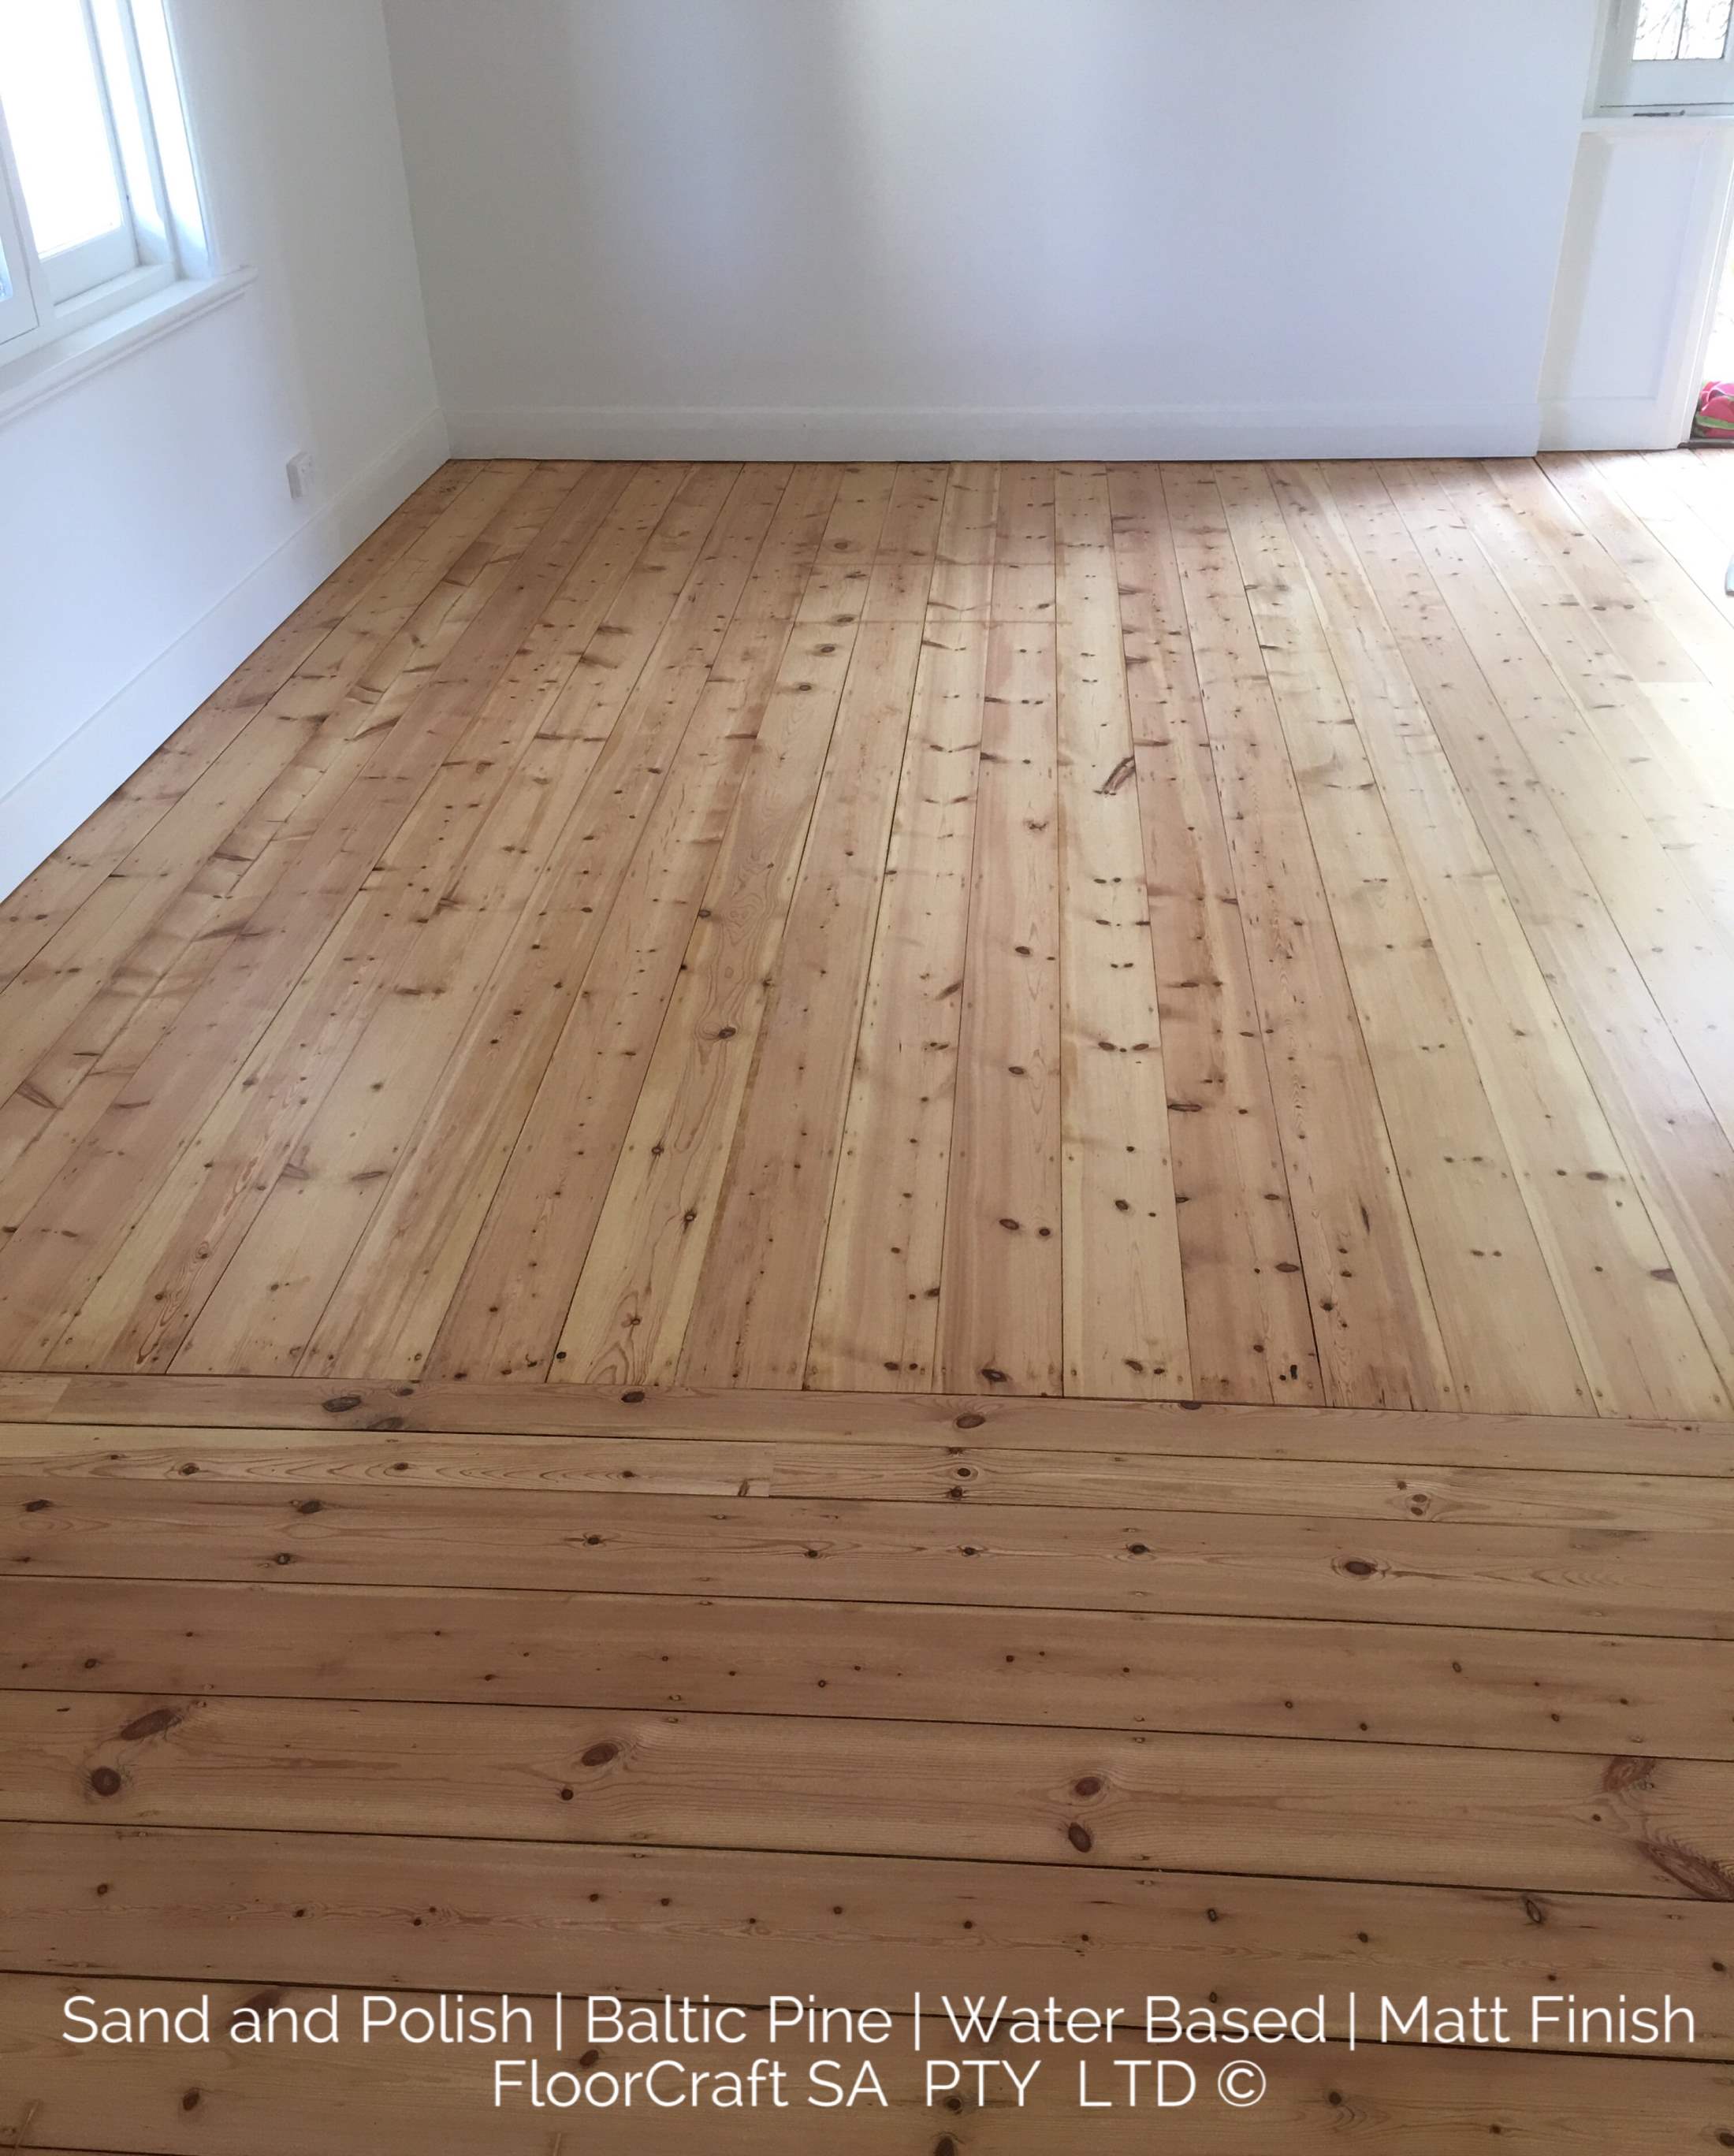 FloorCraft Adelaide Timber Flooring - Floating Floors Sanding & Polishing Timber Floor